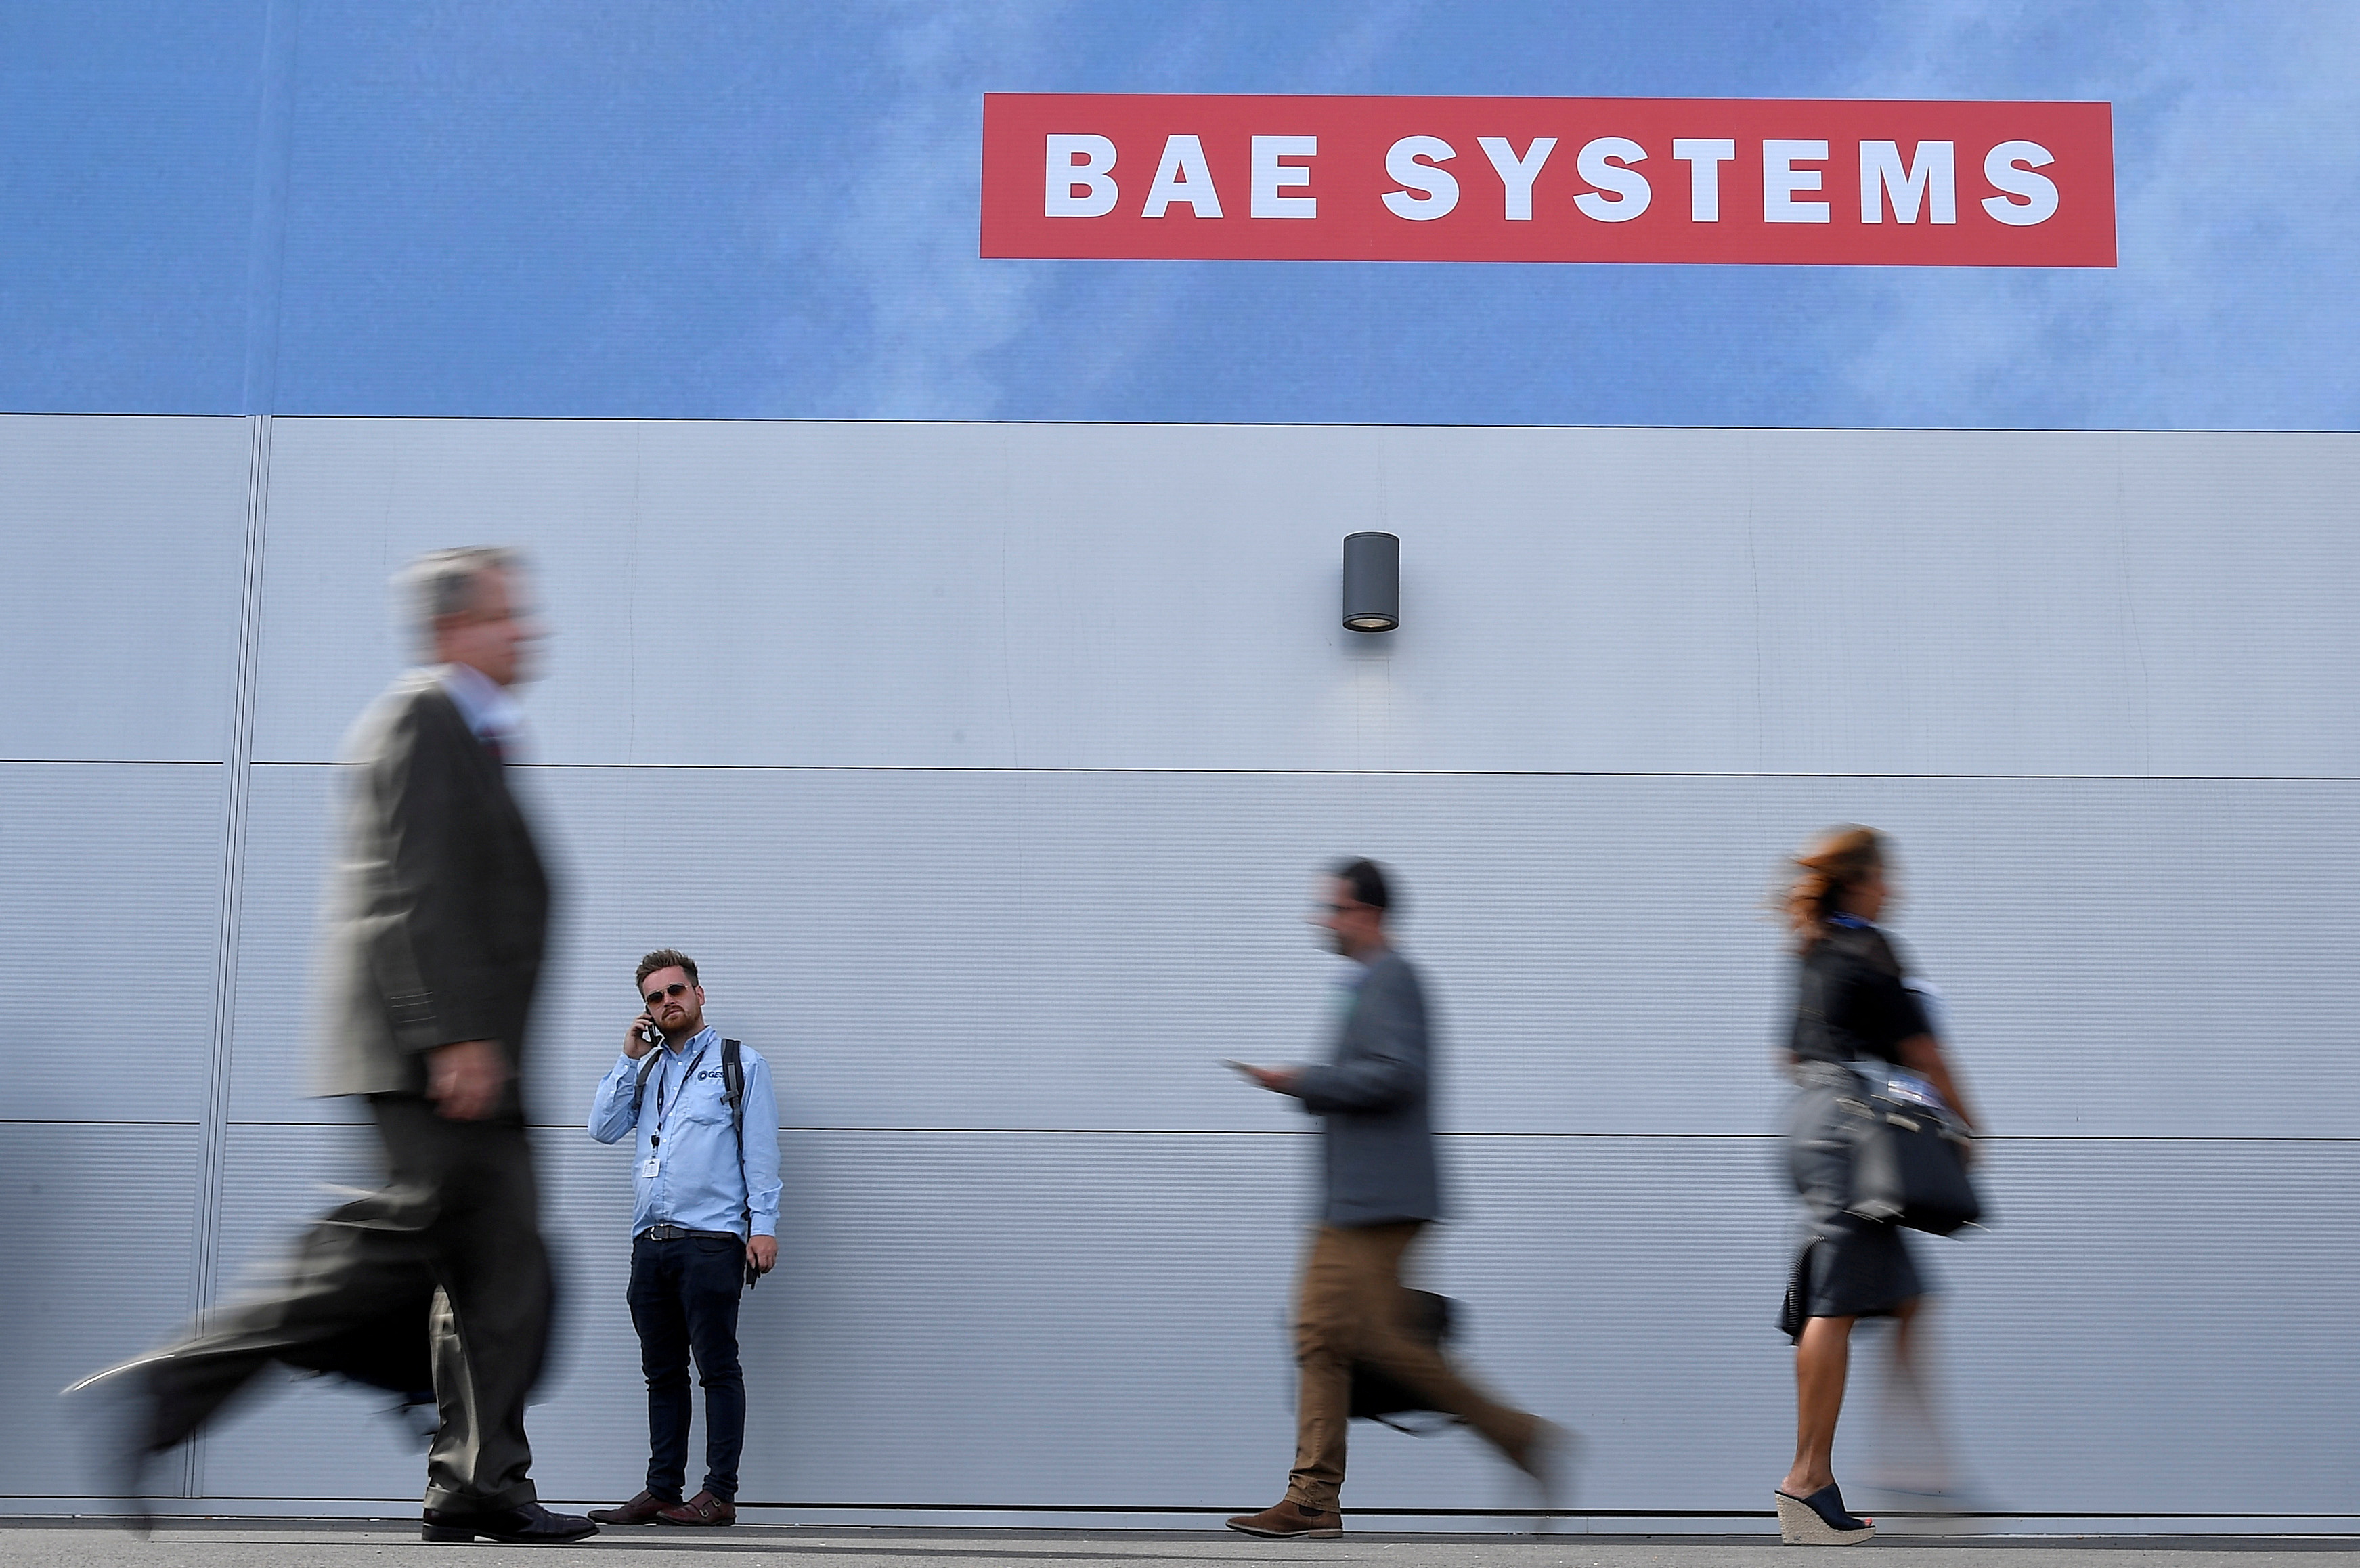 Trade visitors walk past an advertisement for BAE Systems at Farnborough International Airshow in Farnborough, Britain